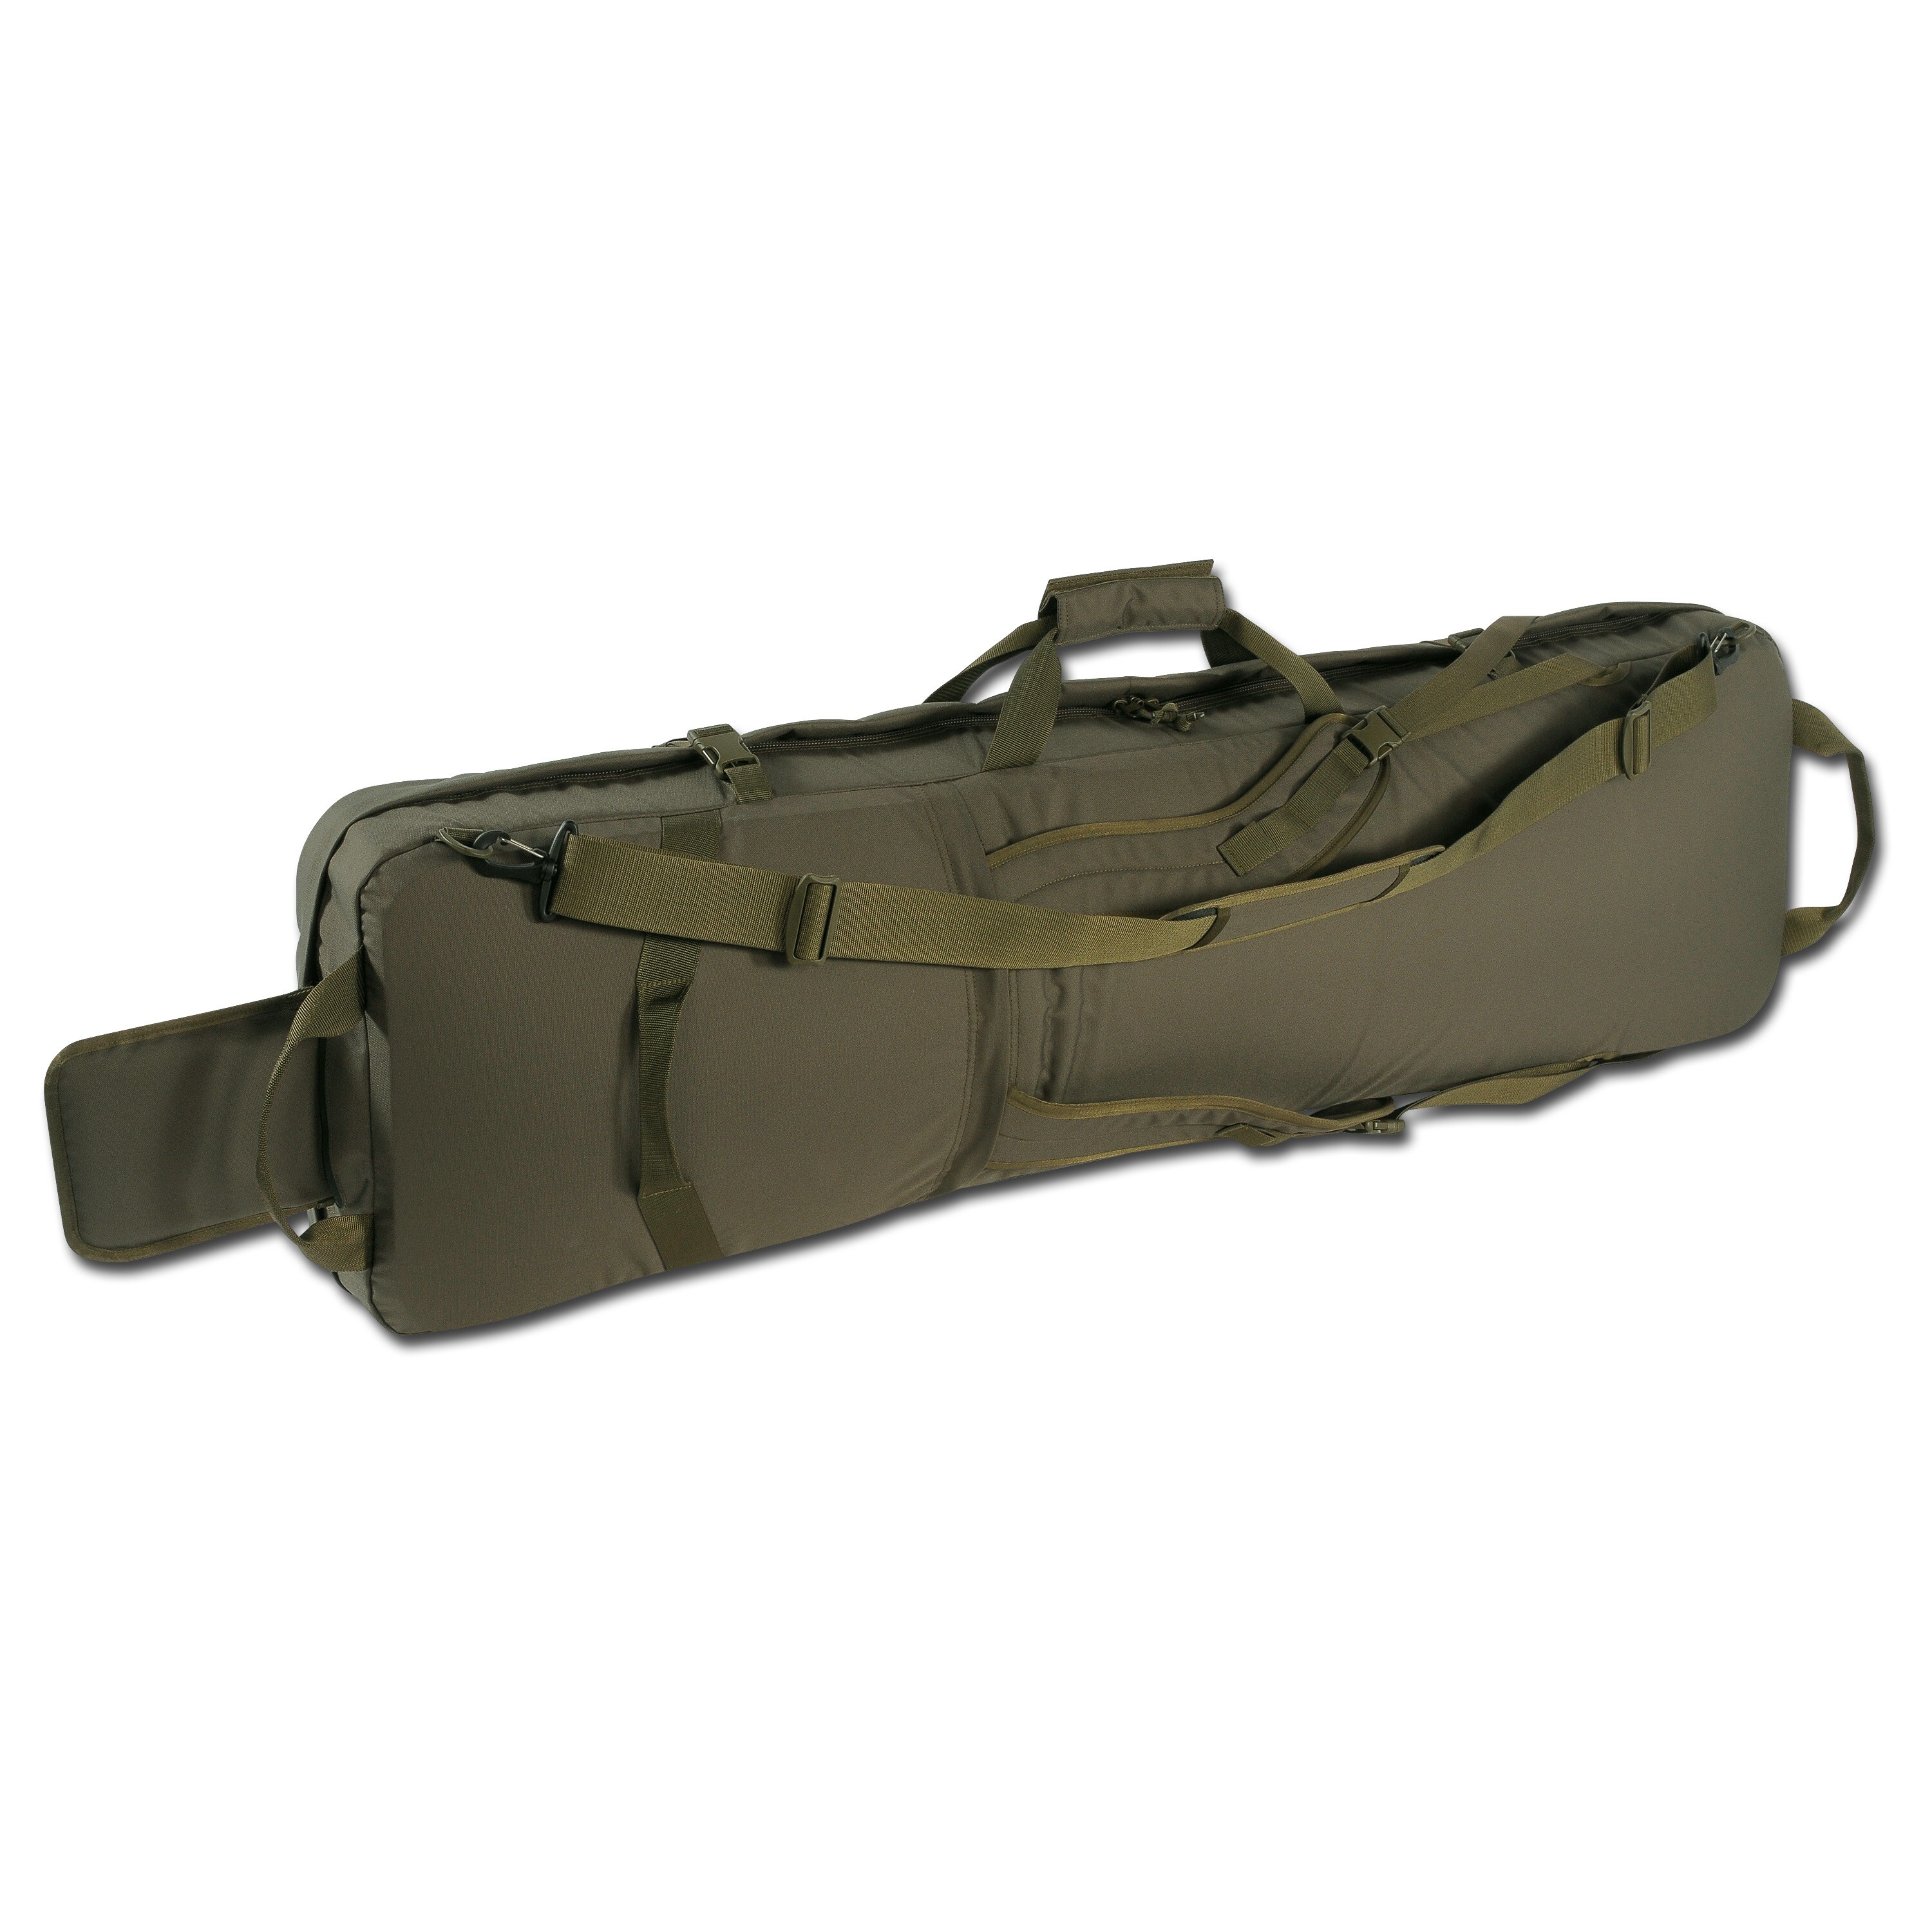 Purchase the Tasmanian Tiger DBL Modular Rifle Bag olive by ASMC